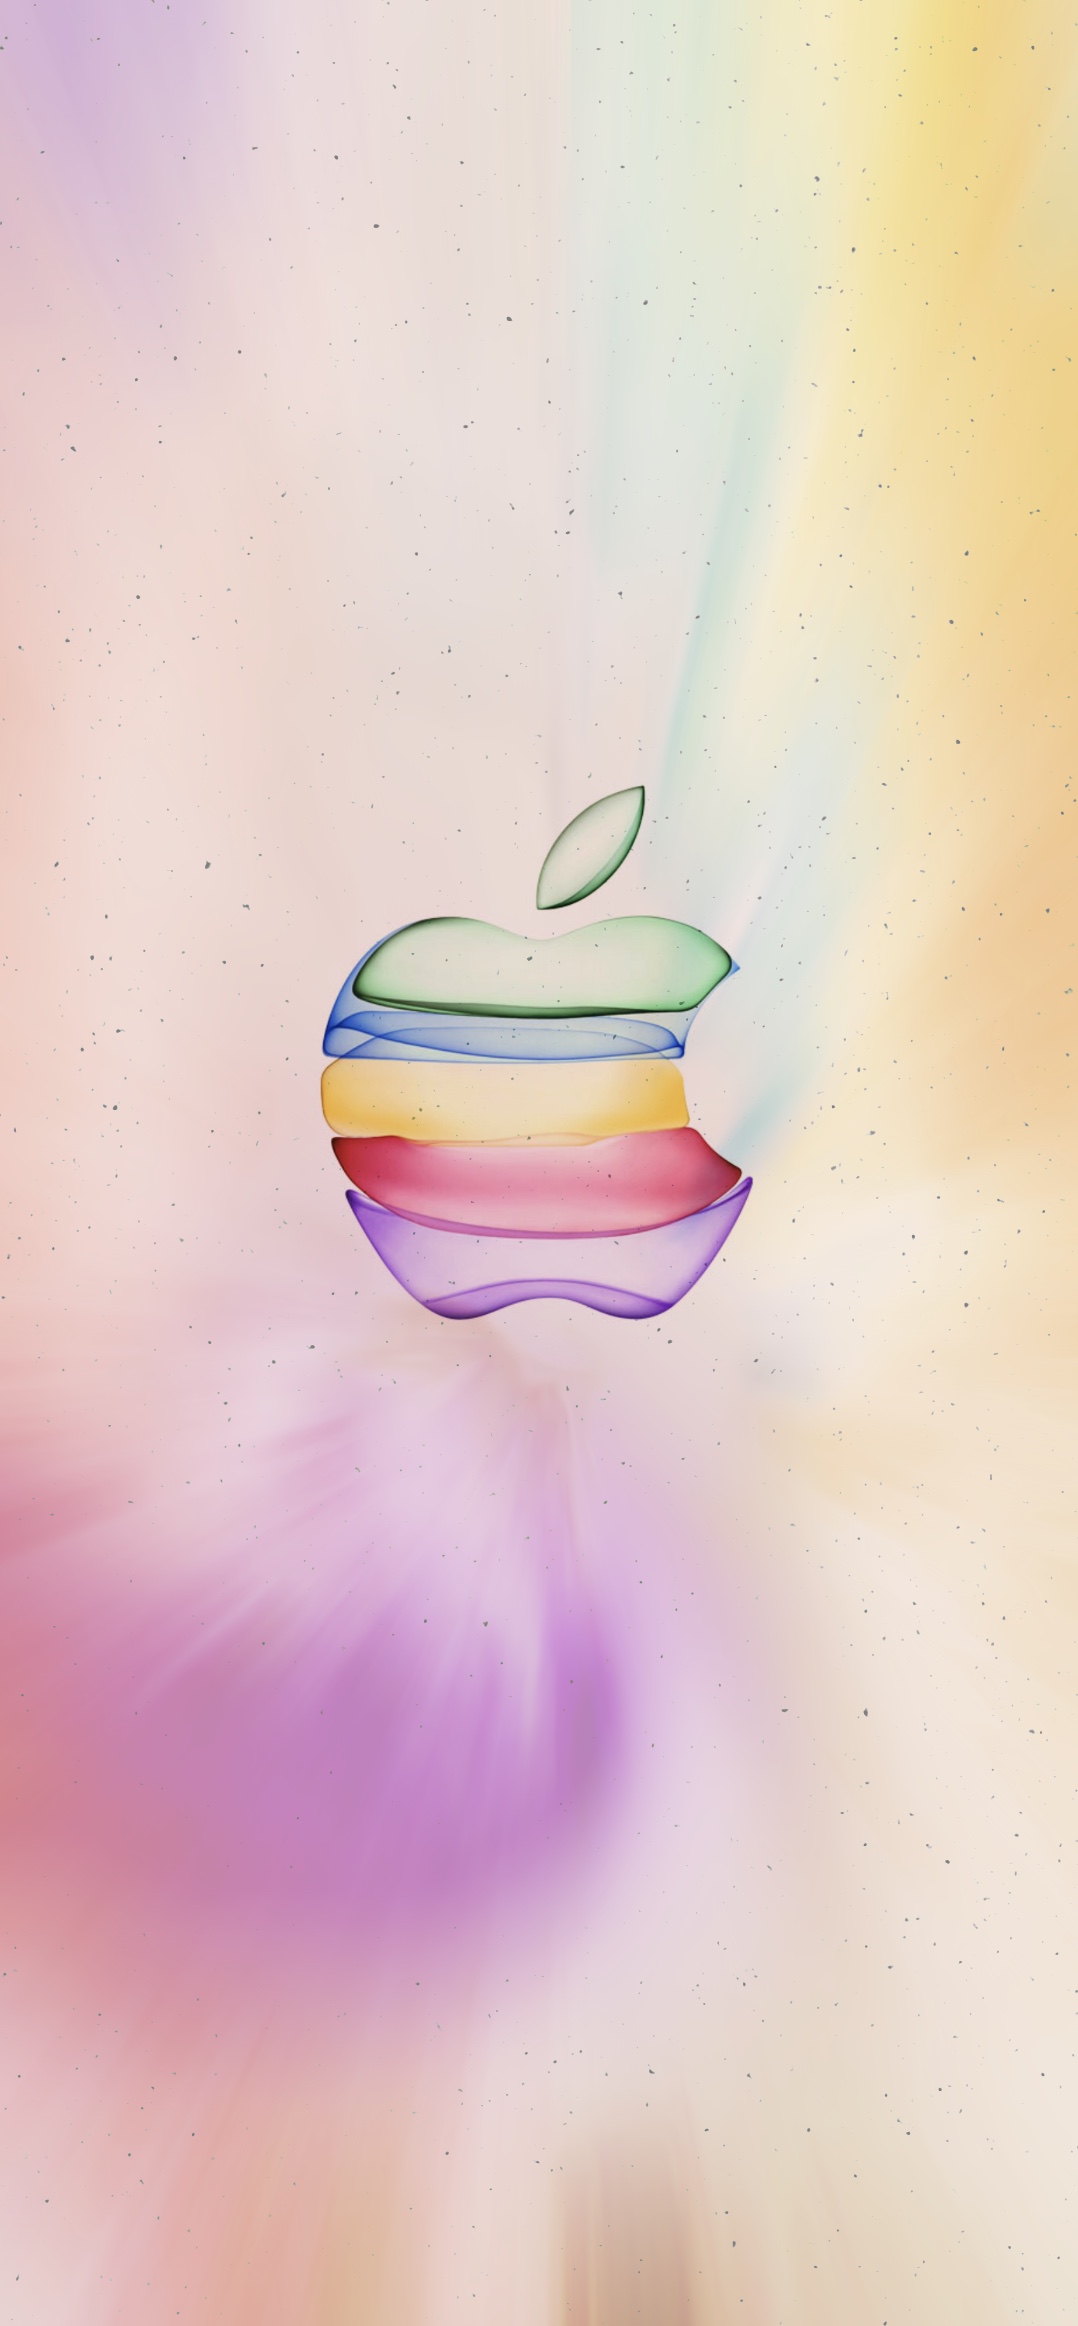 Apple Event iPhone 11 fresk0_